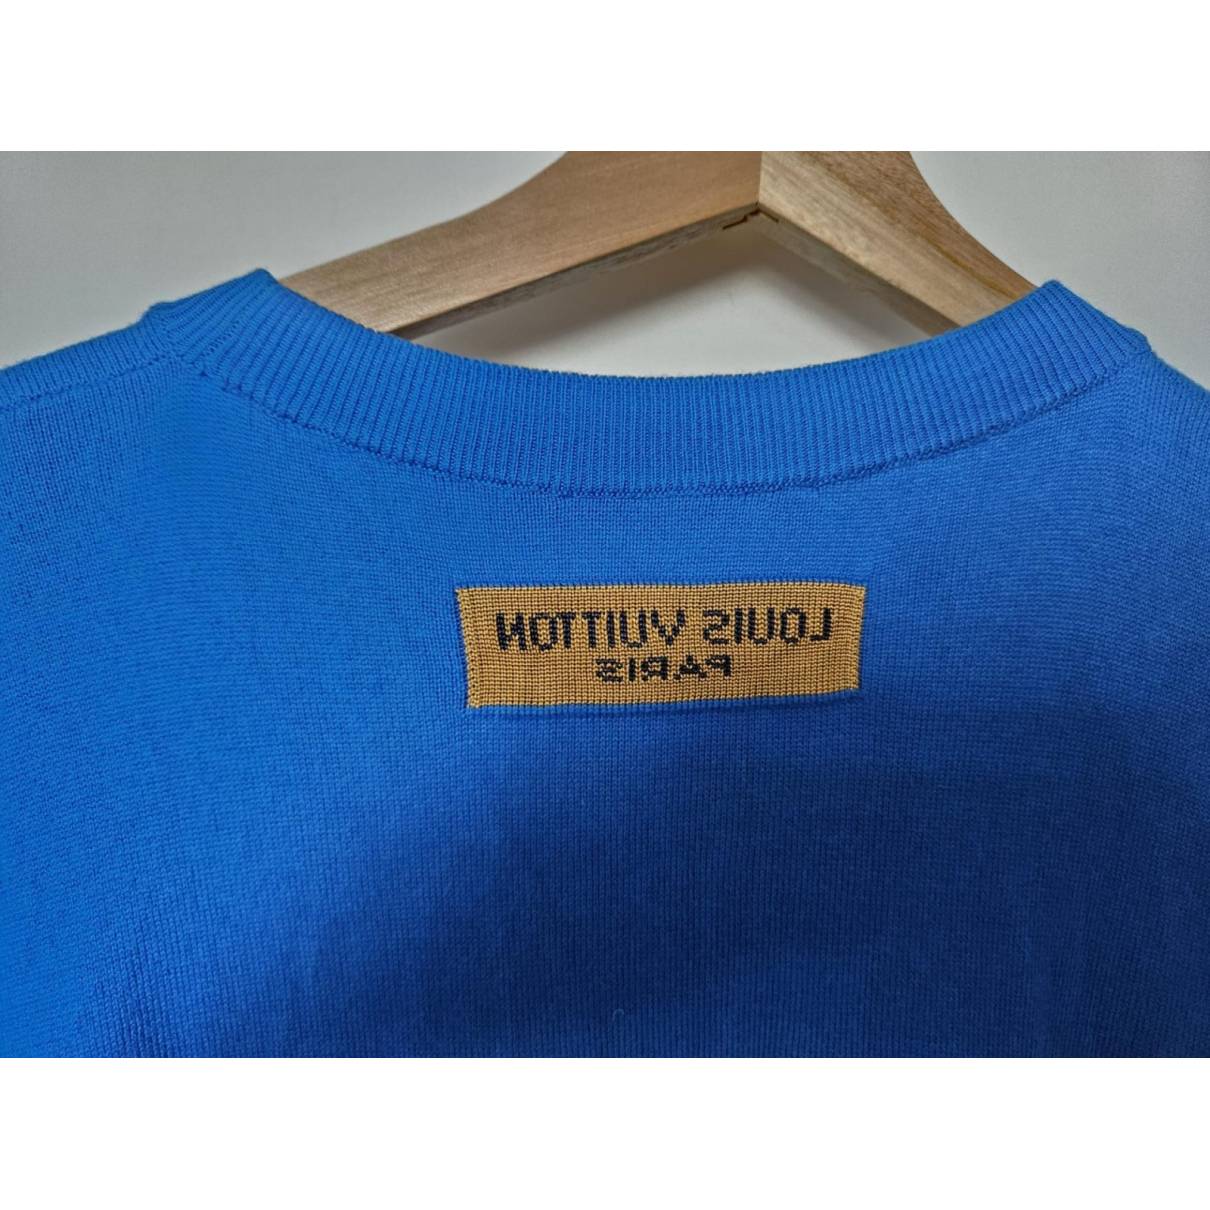 Blue t-shirt Louis Vuitton Blue size M International in Other